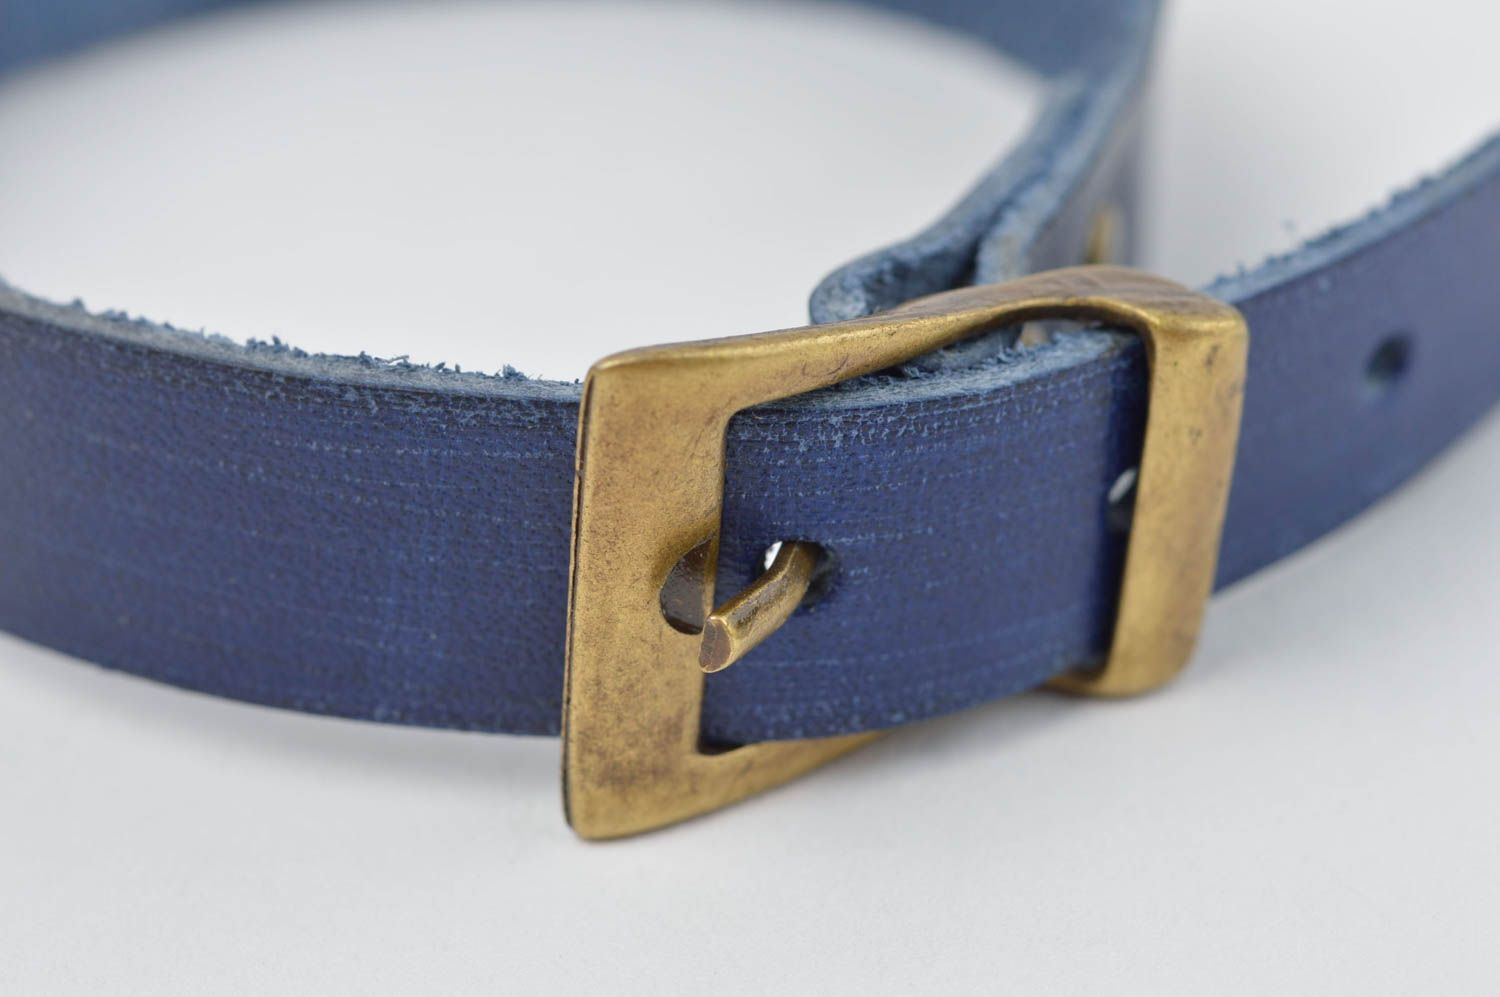 Stylish handmade leather bracelet leather goods fashion accessories gift ideas photo 4